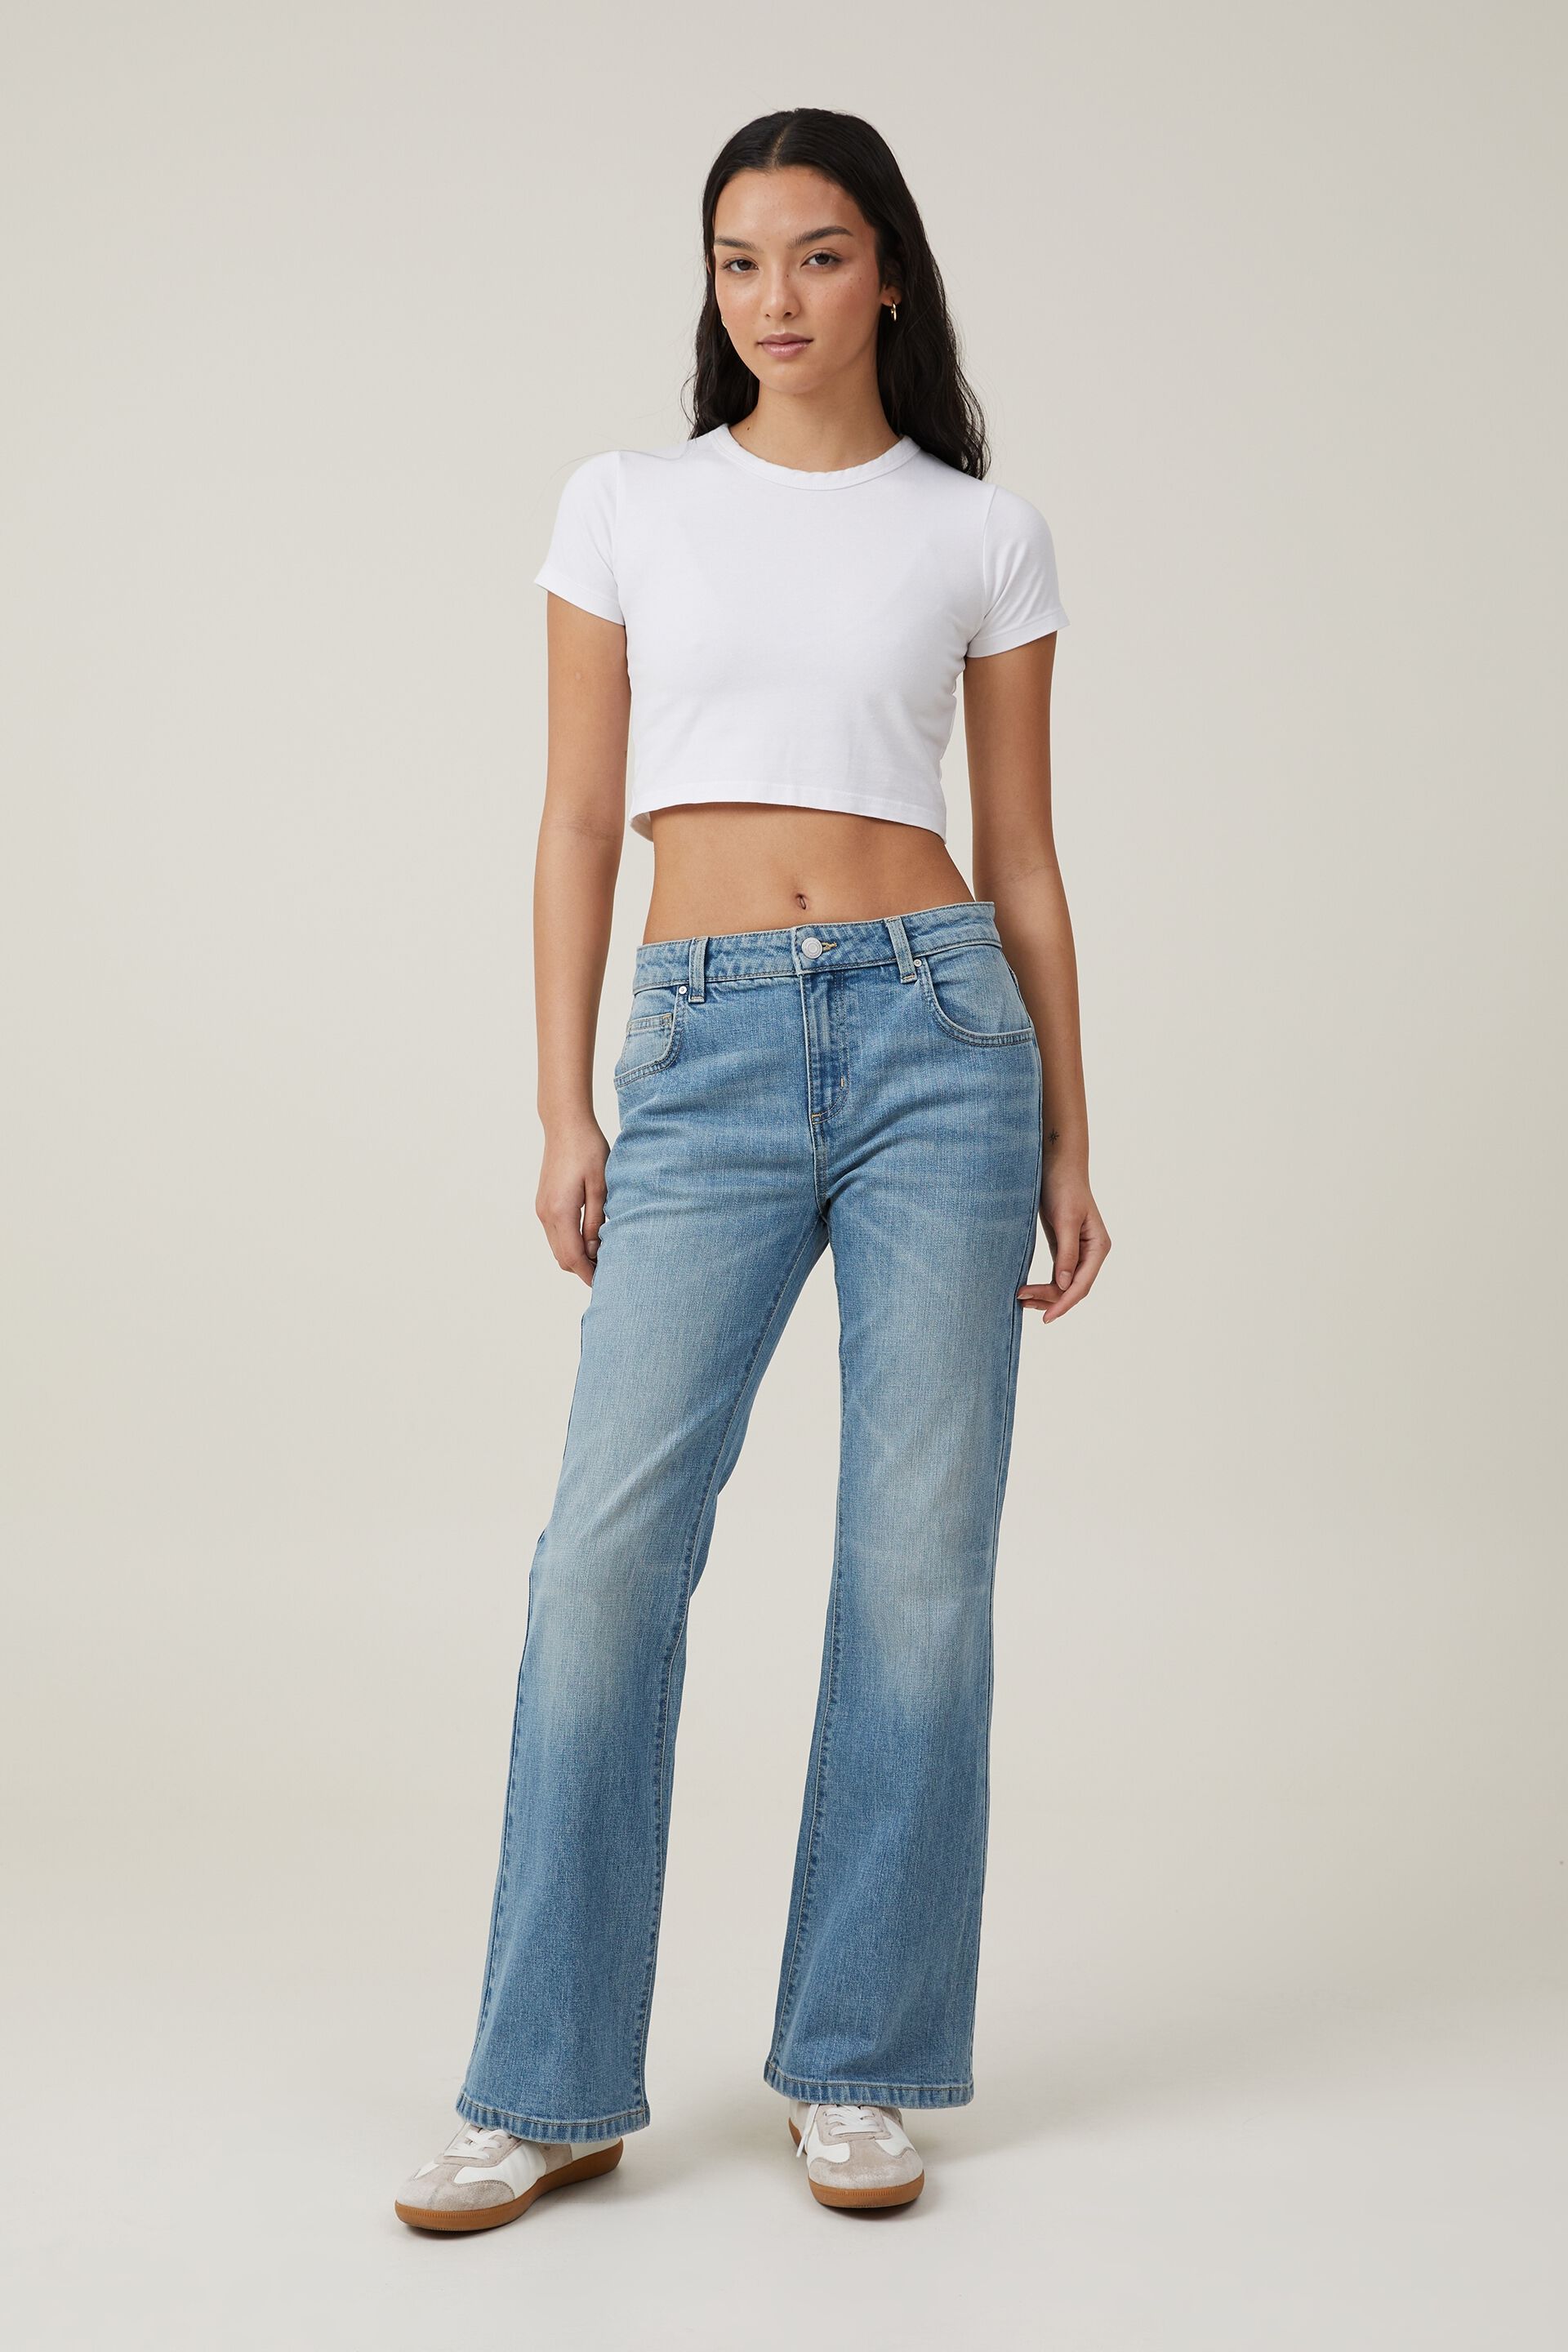 Chambray Denim Flare Jean | Women's Pants - Motto Fashions